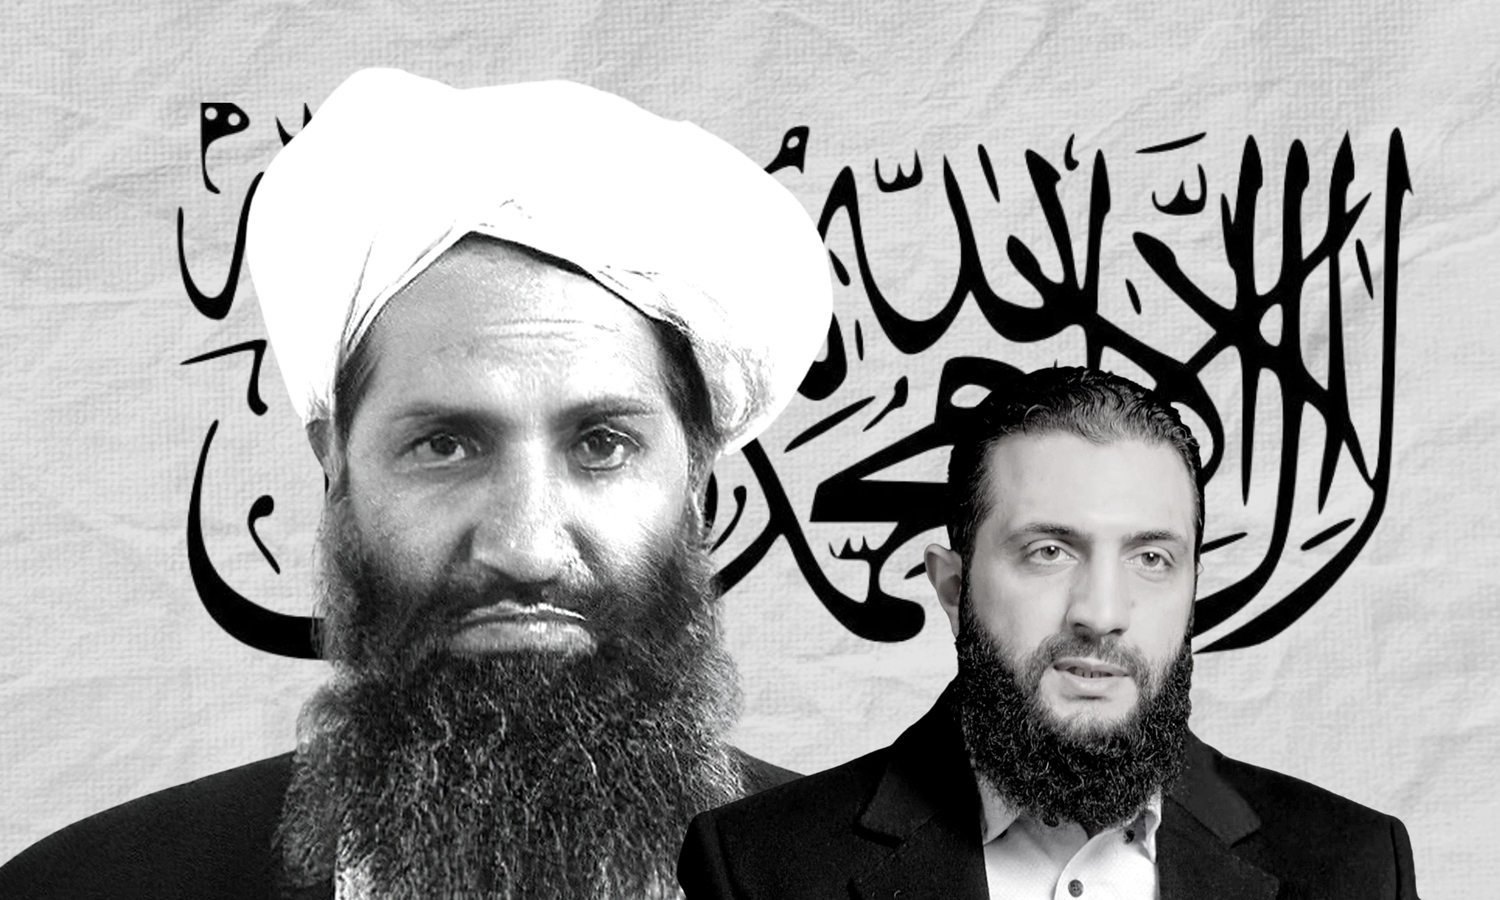 Taliban’s leader Hibatullah Akhundzada and Hayat Tahrir al-Sham’s leader Abu Mohammed al-Golani (edited by Enab Baladi)